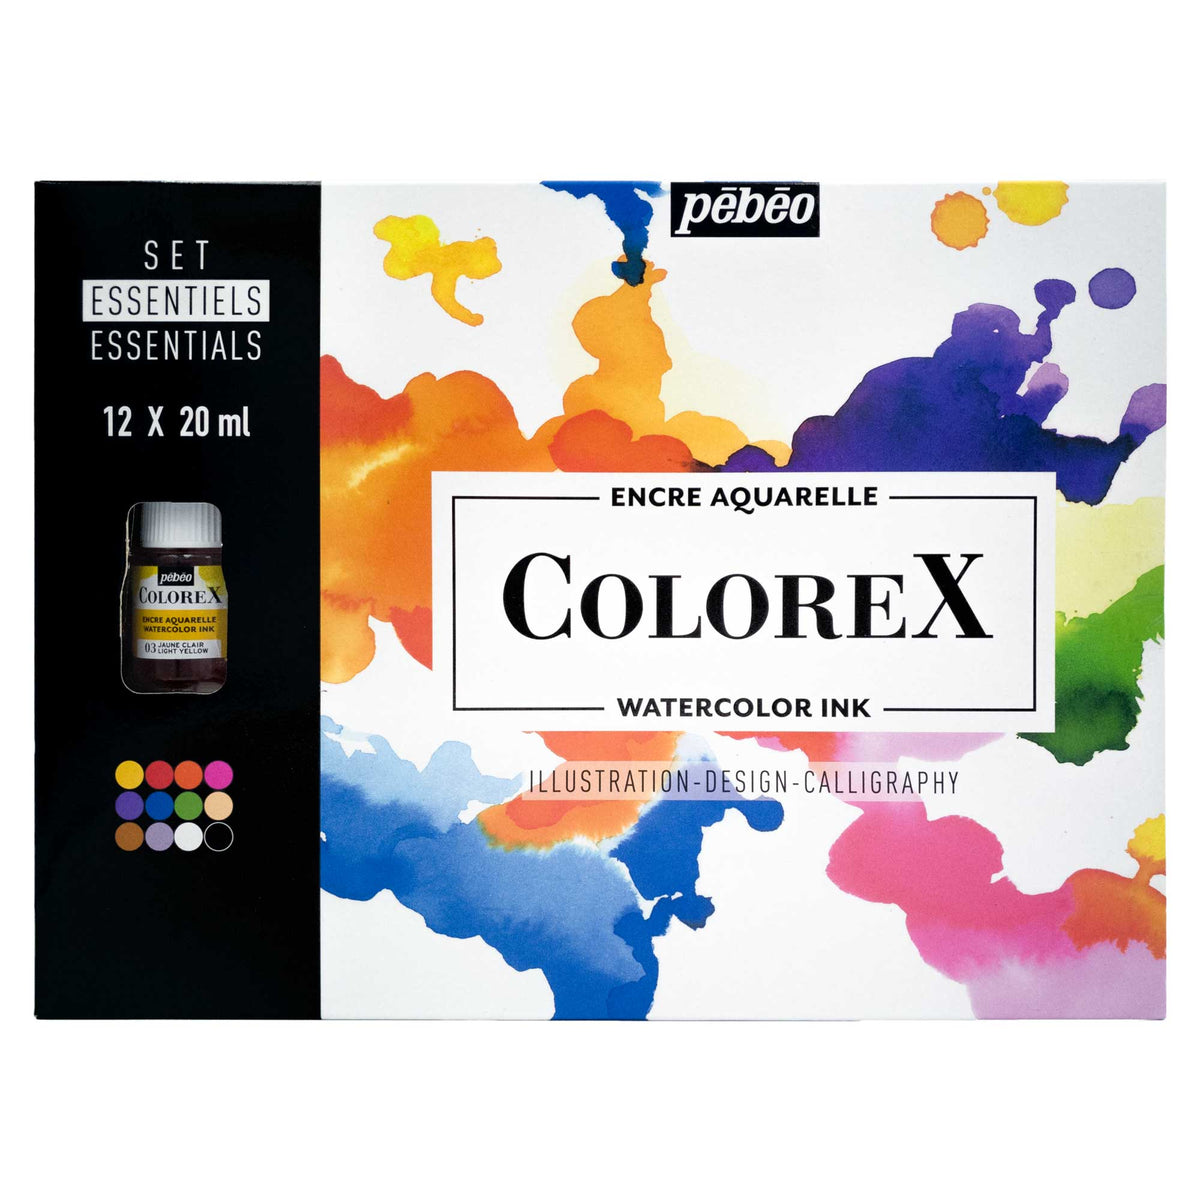 Pebeo Colorex Watercolour Ink Essential Colours - Set of 12 x 20ml